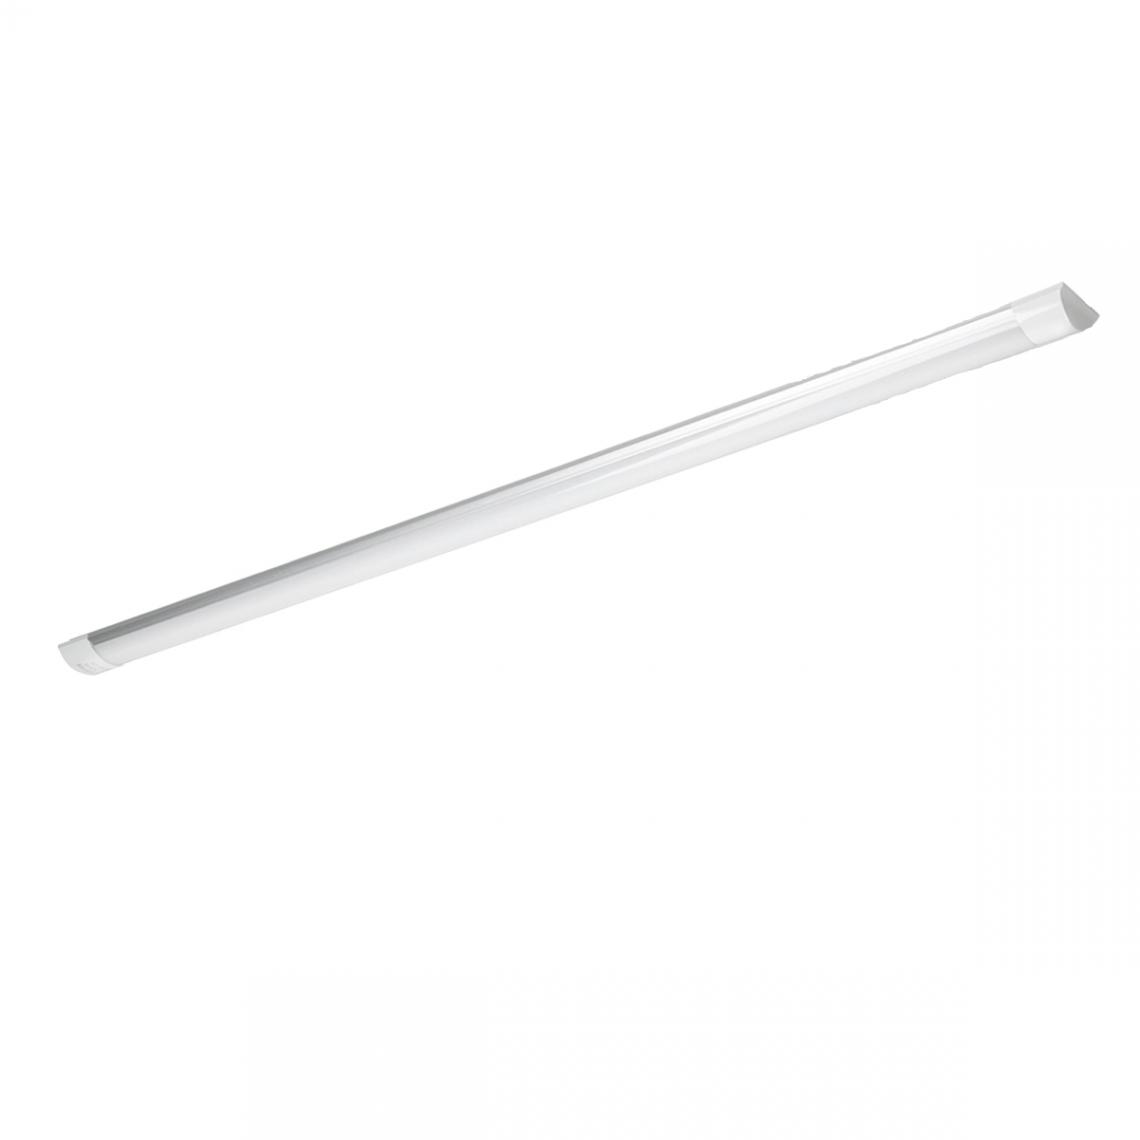 Ecd Germany - Set 15x LED batten tube 36W 120cm blanc froid surface luminaire slim barre plafond - Tubes et néons